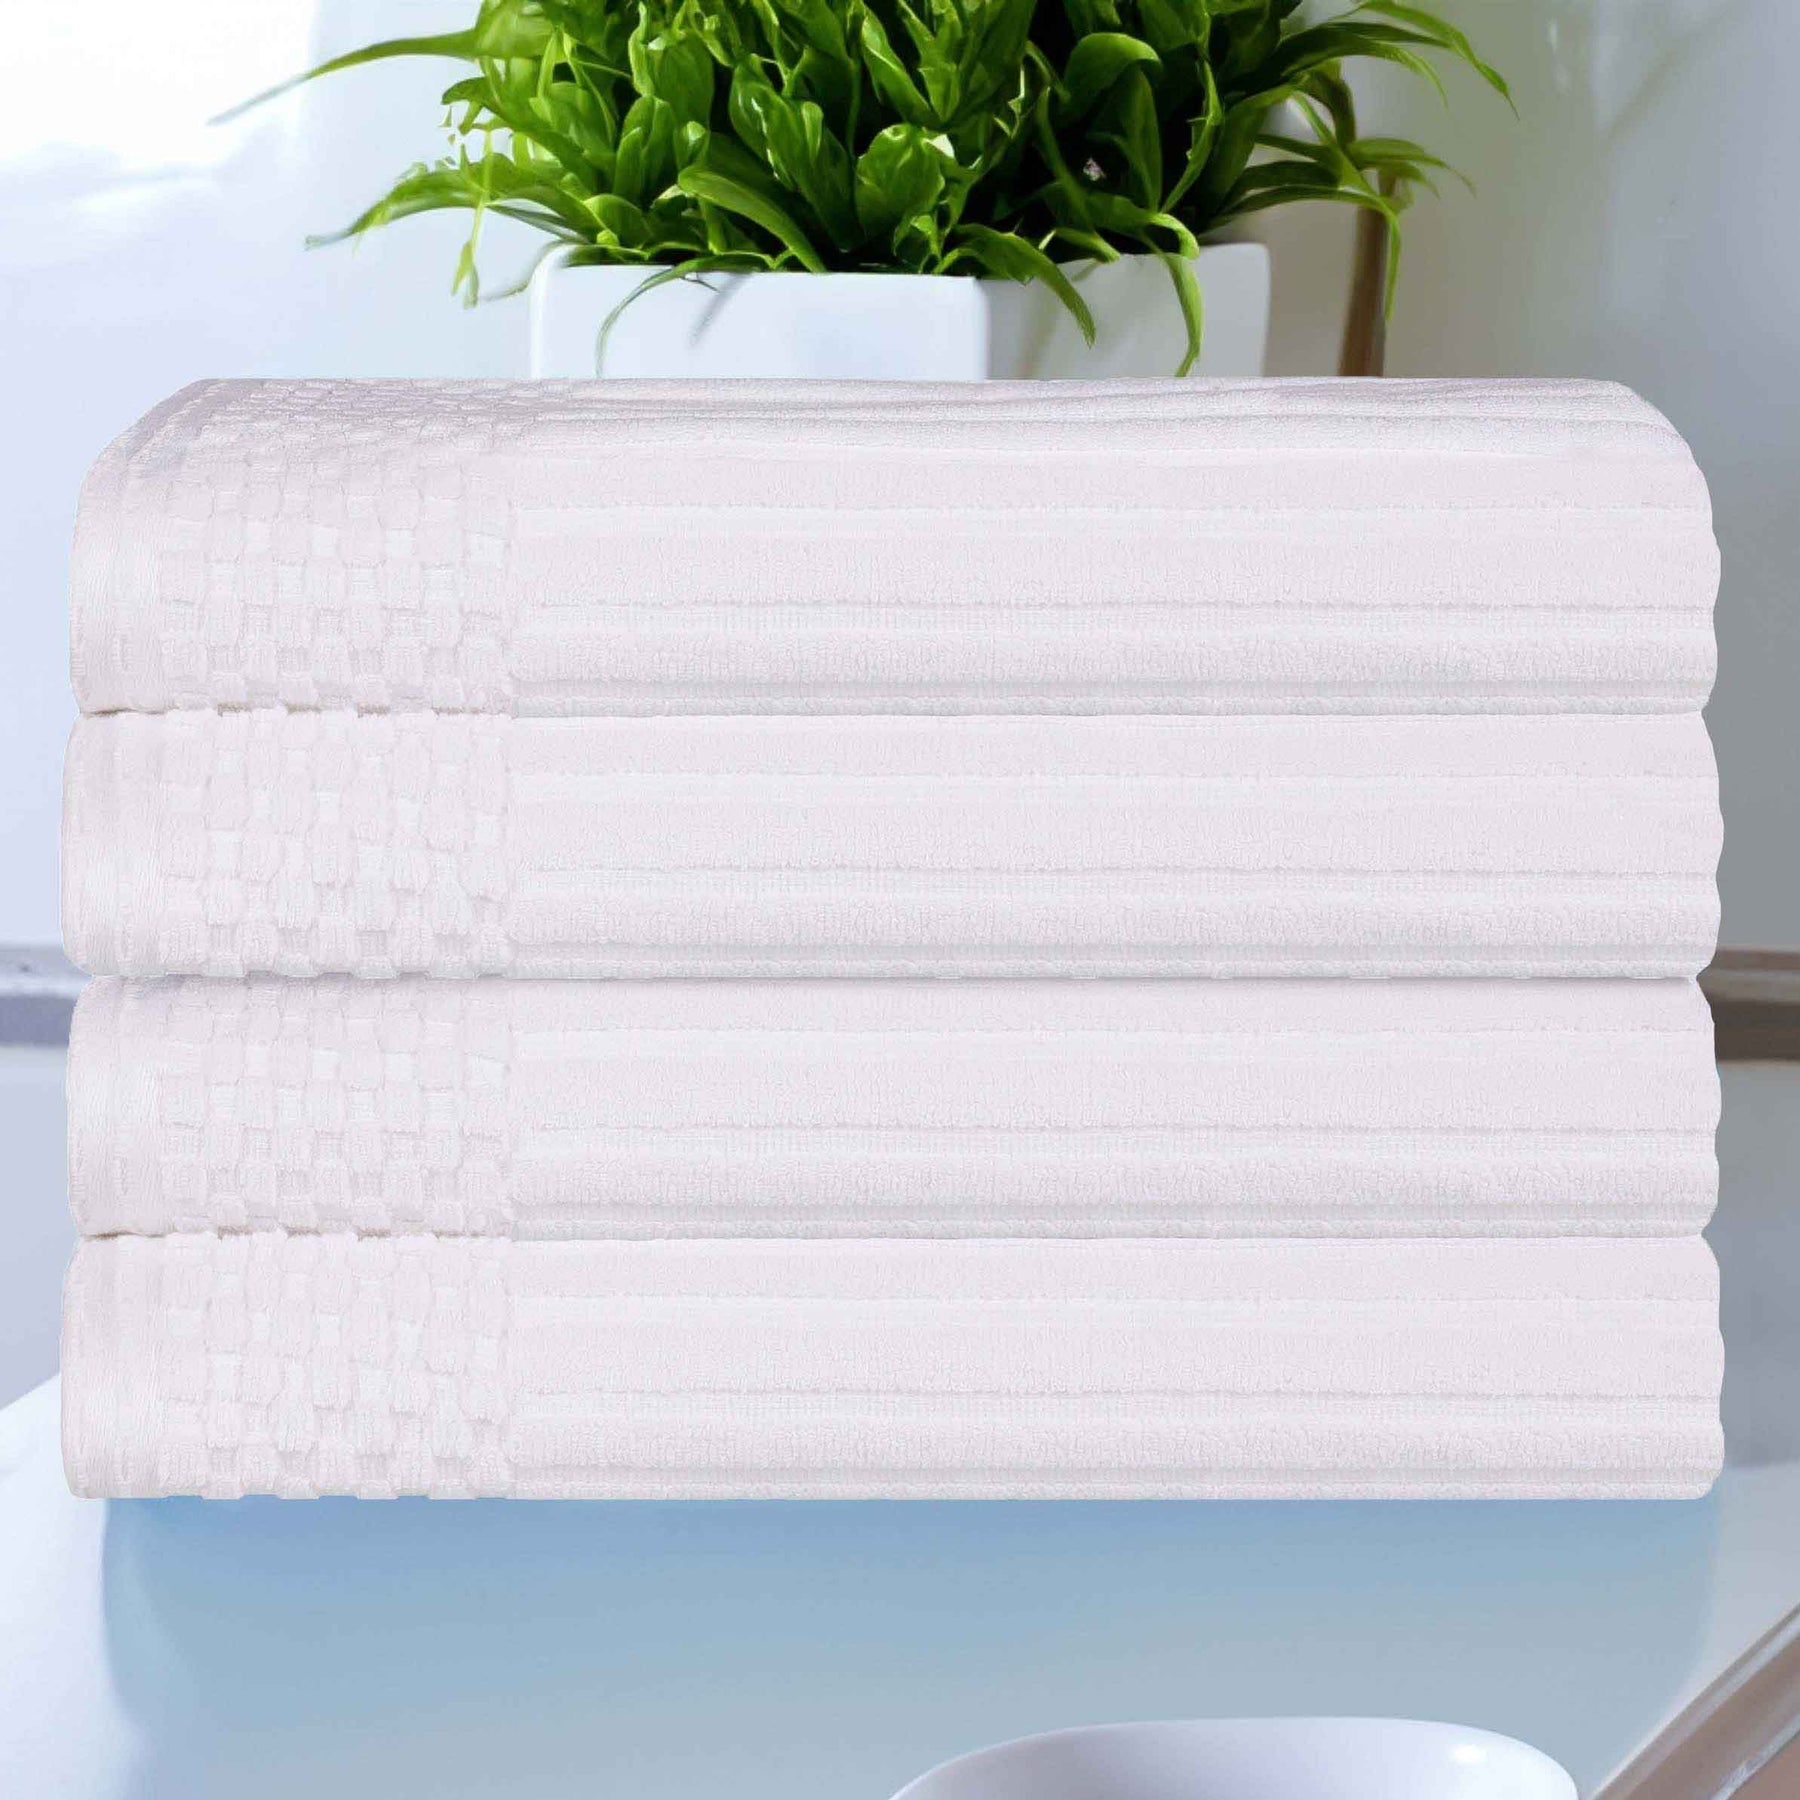 Soho Ribbed Cotton Absorbent Bath Towel Set of 4 - White